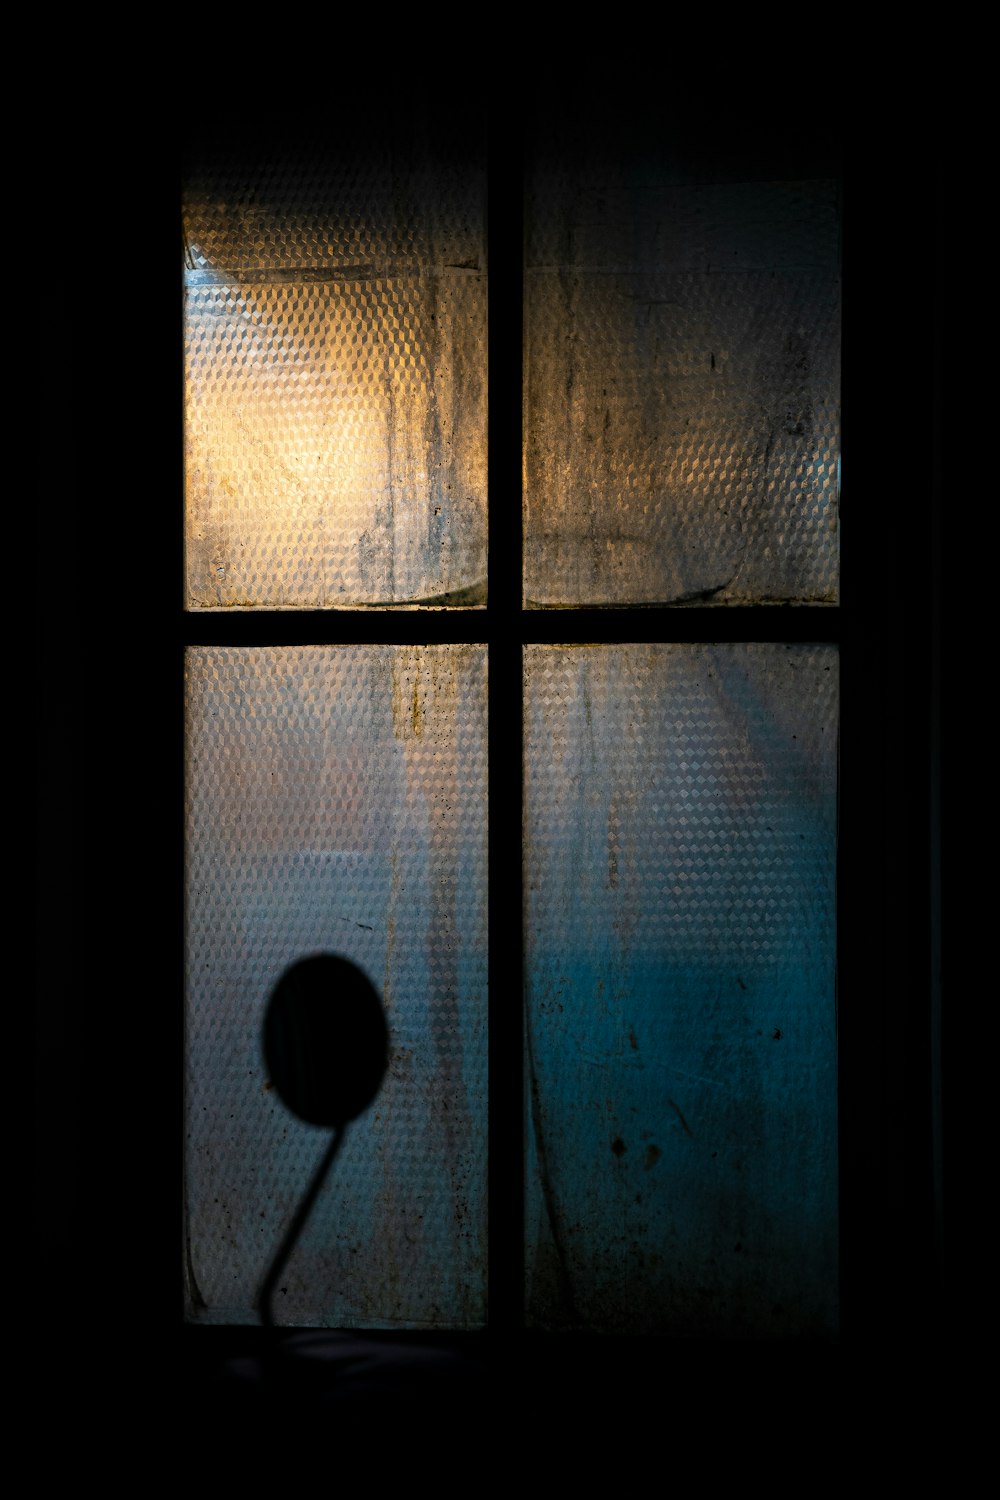 a shadow of a street light on a window